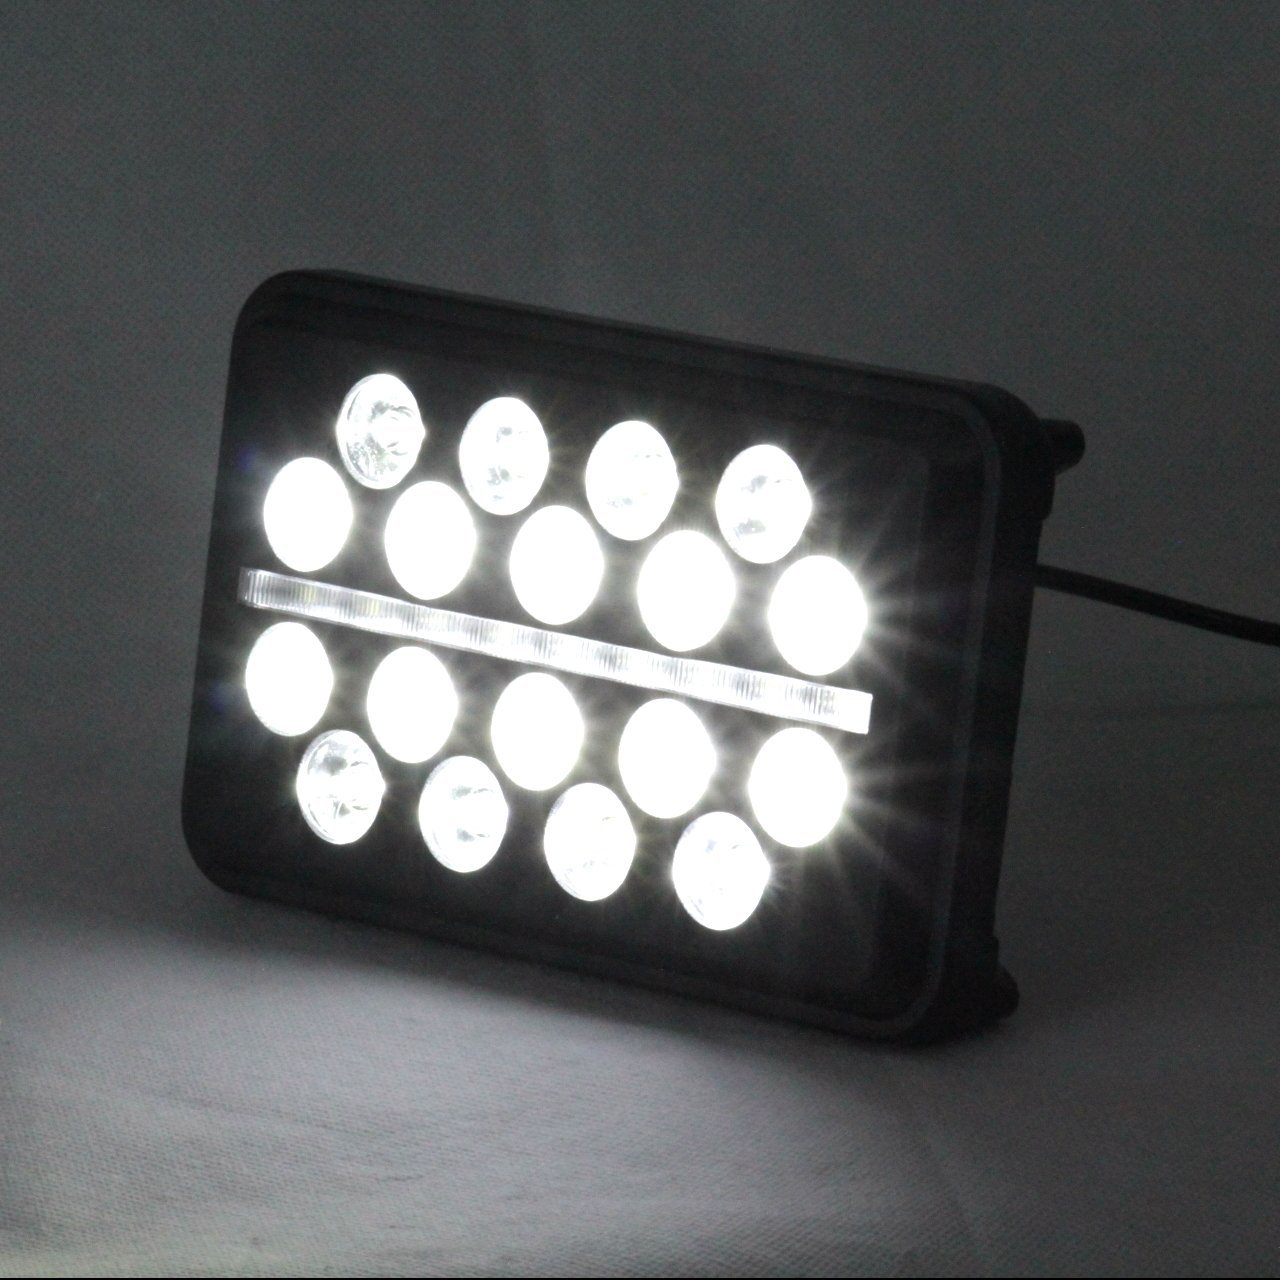 1A1 LED headlights